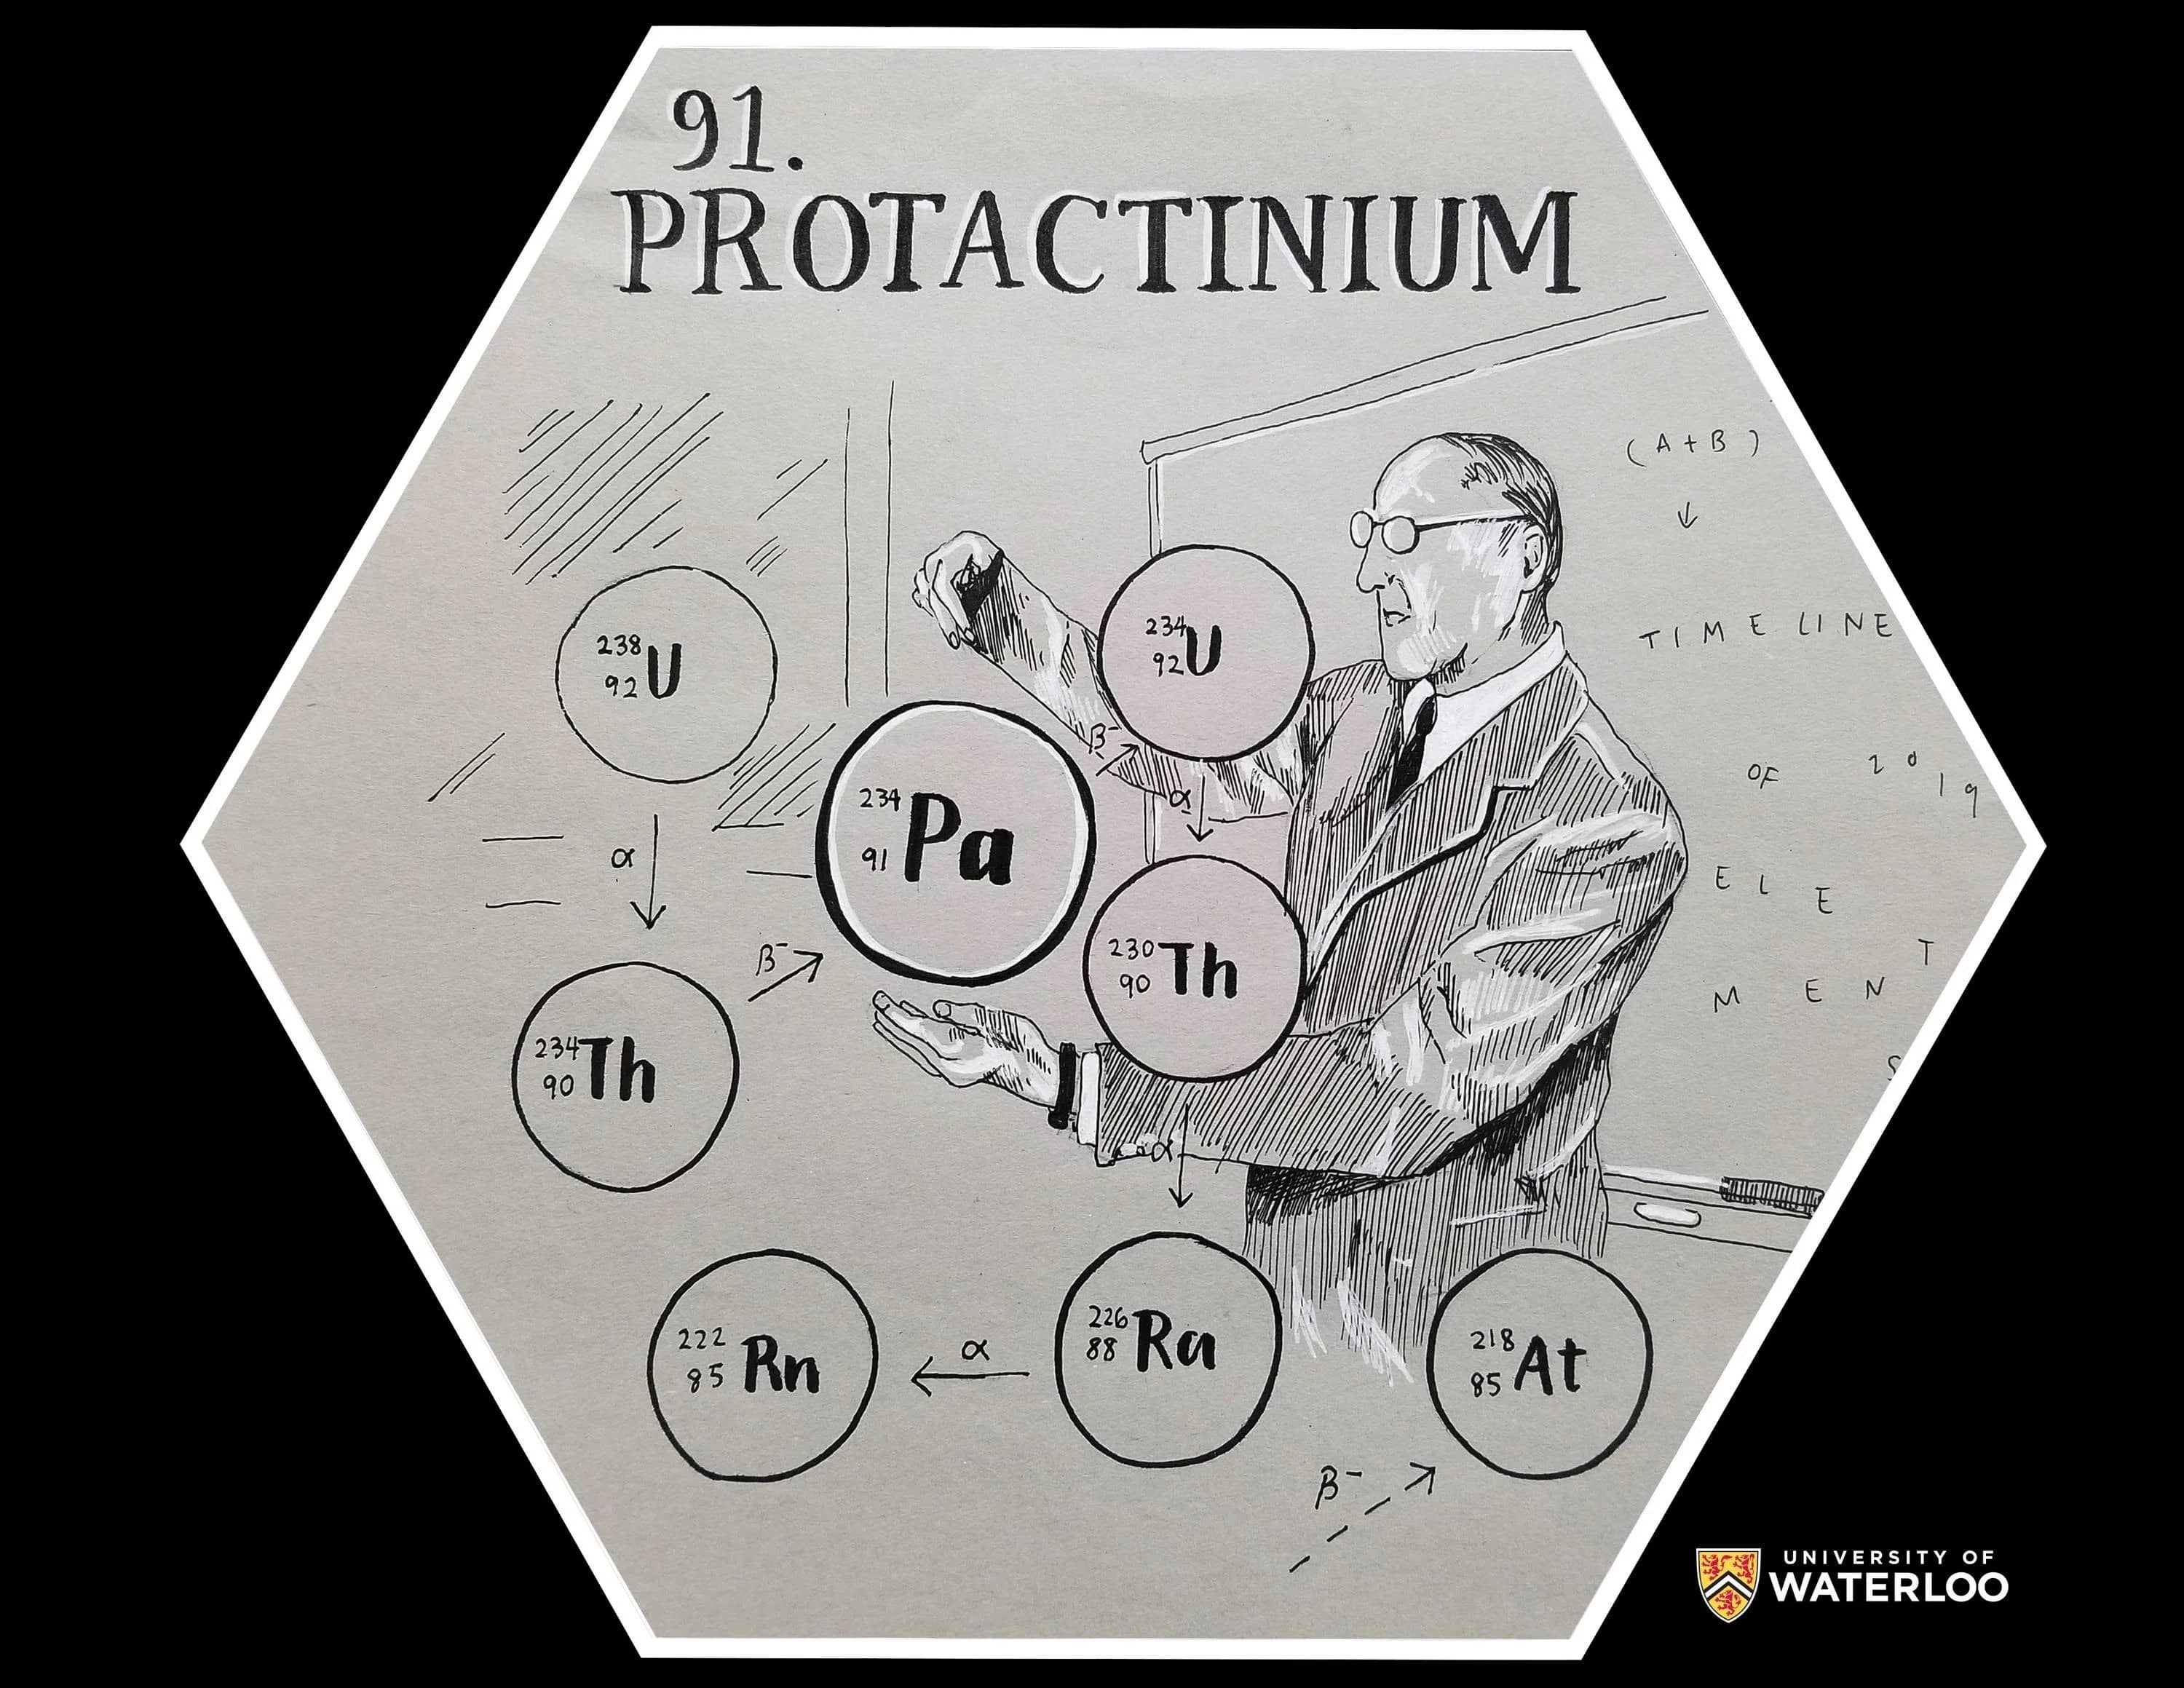 Protactinium element tile design by Plano West Senior High School